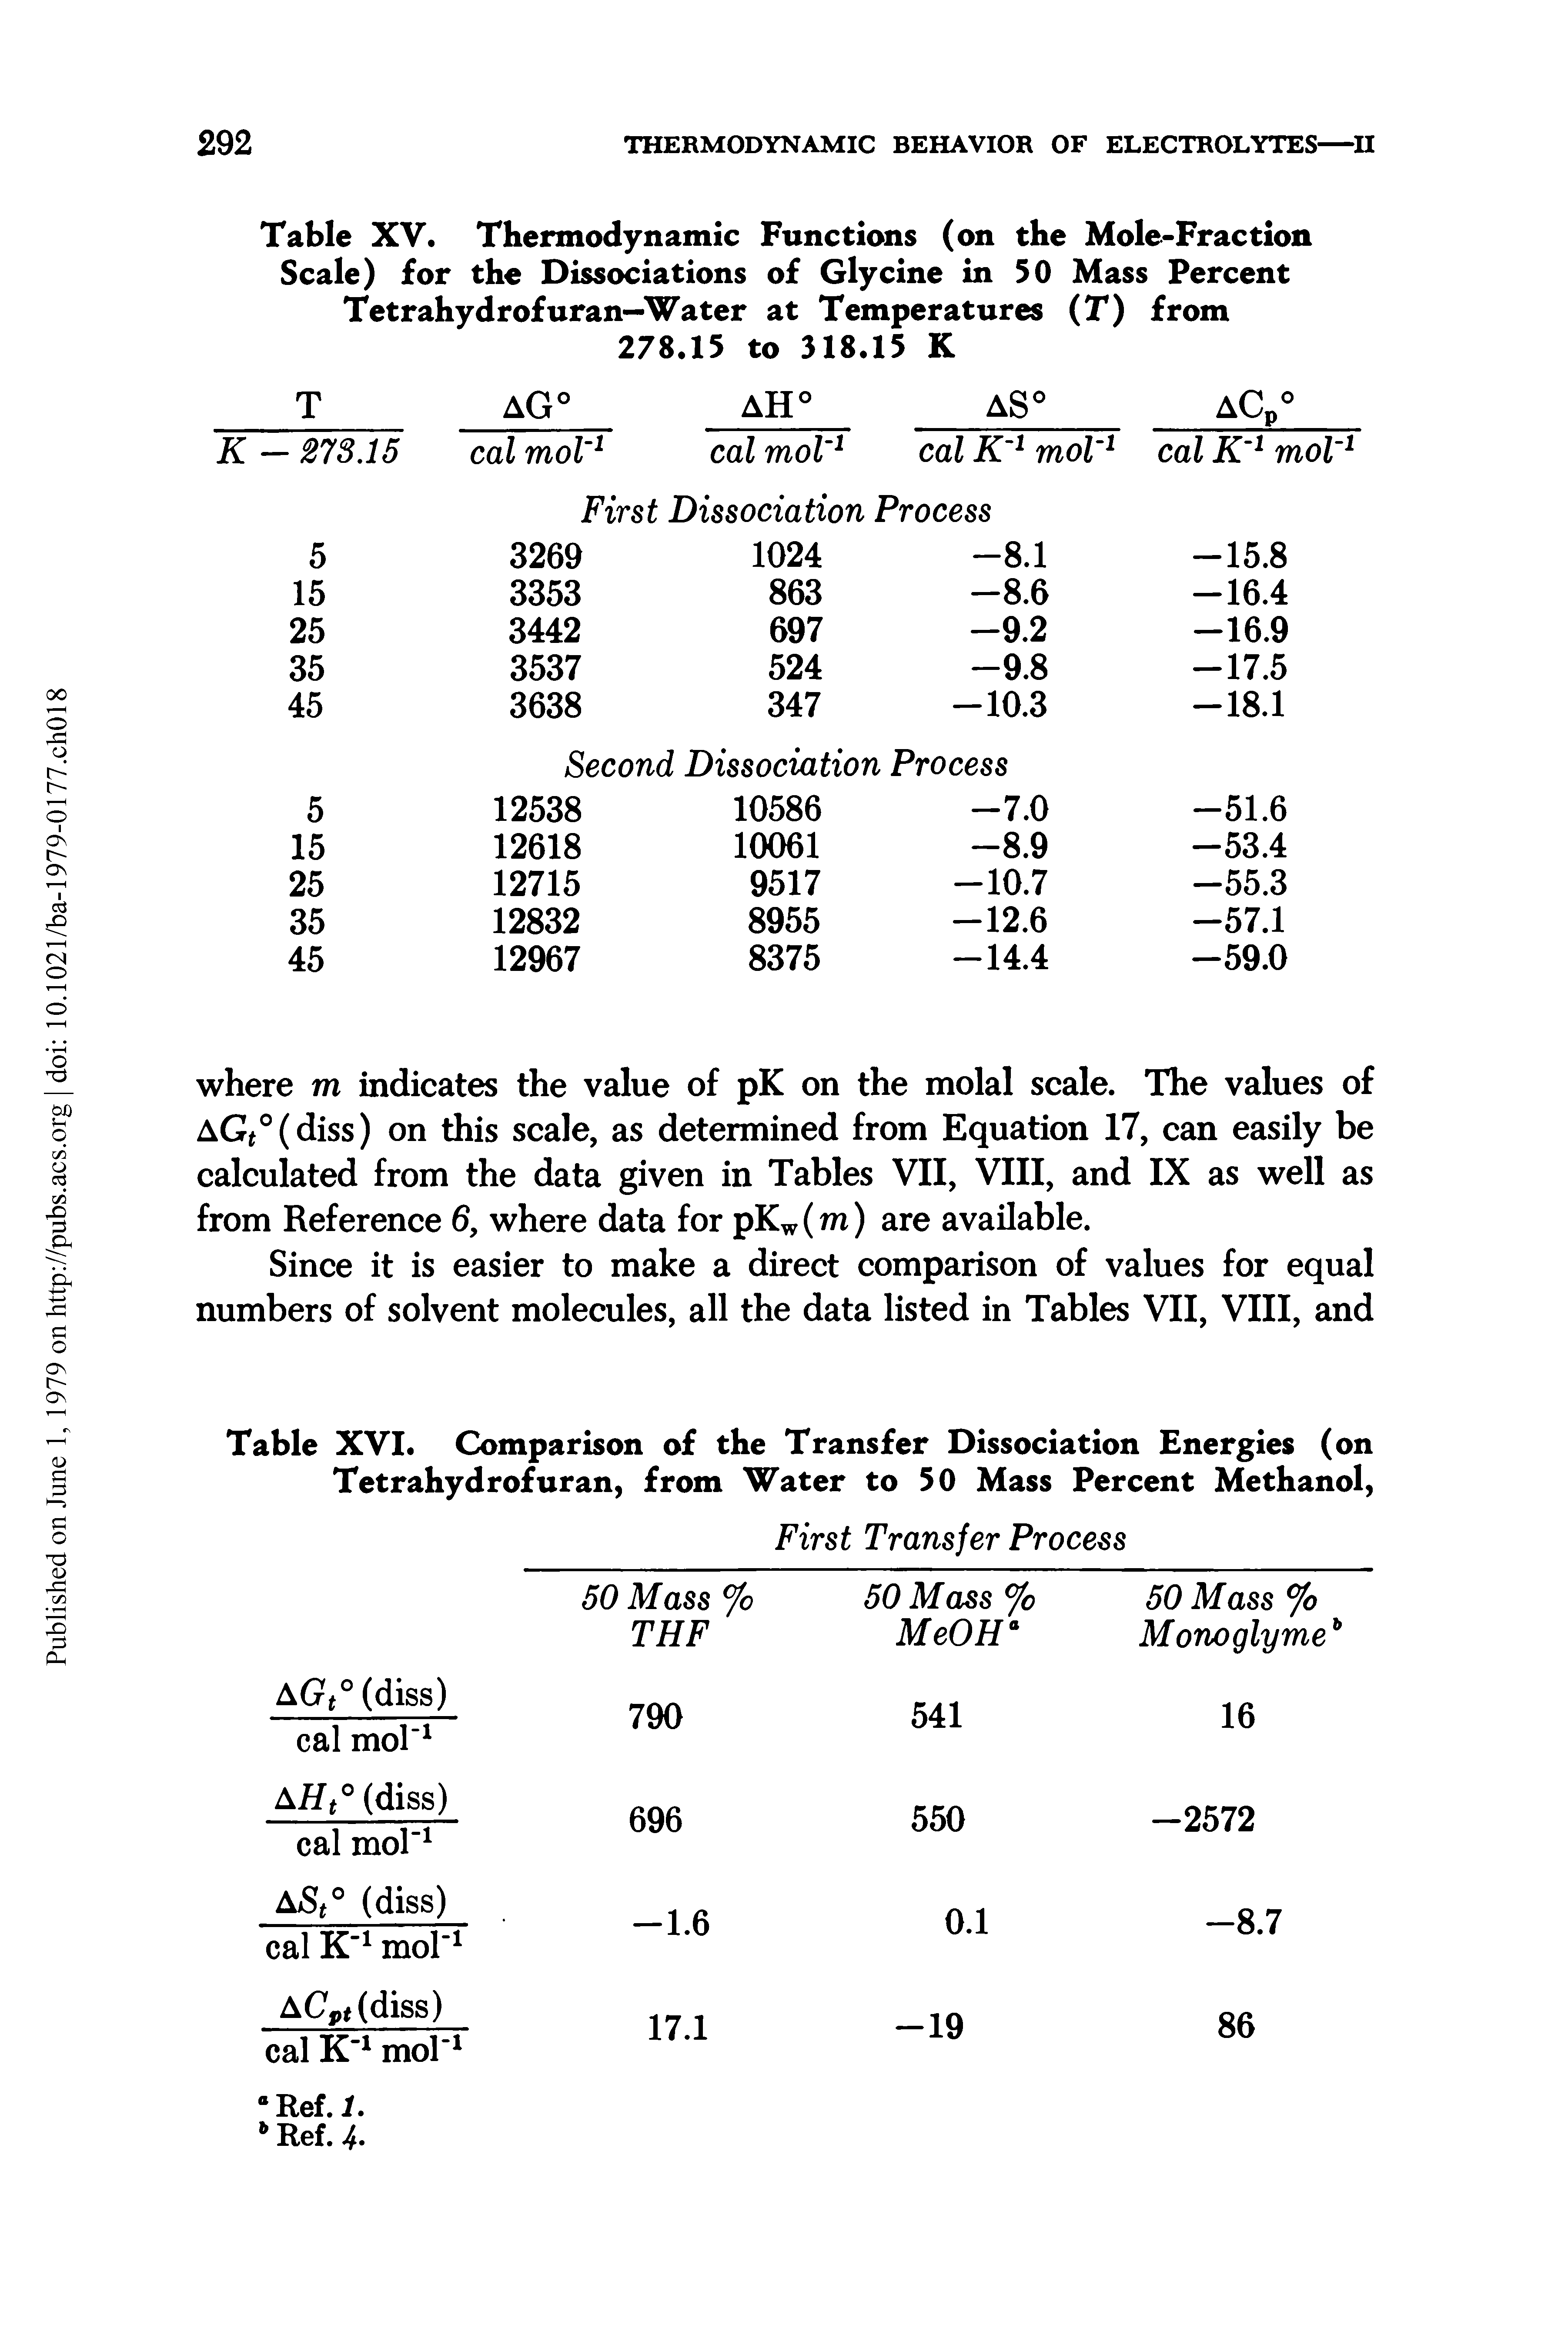 Table XVI. Comparison of the Transfer Dissociation Energies (on Tetrahydrofuran, from Water to 50 Mass Percent Methanol,...